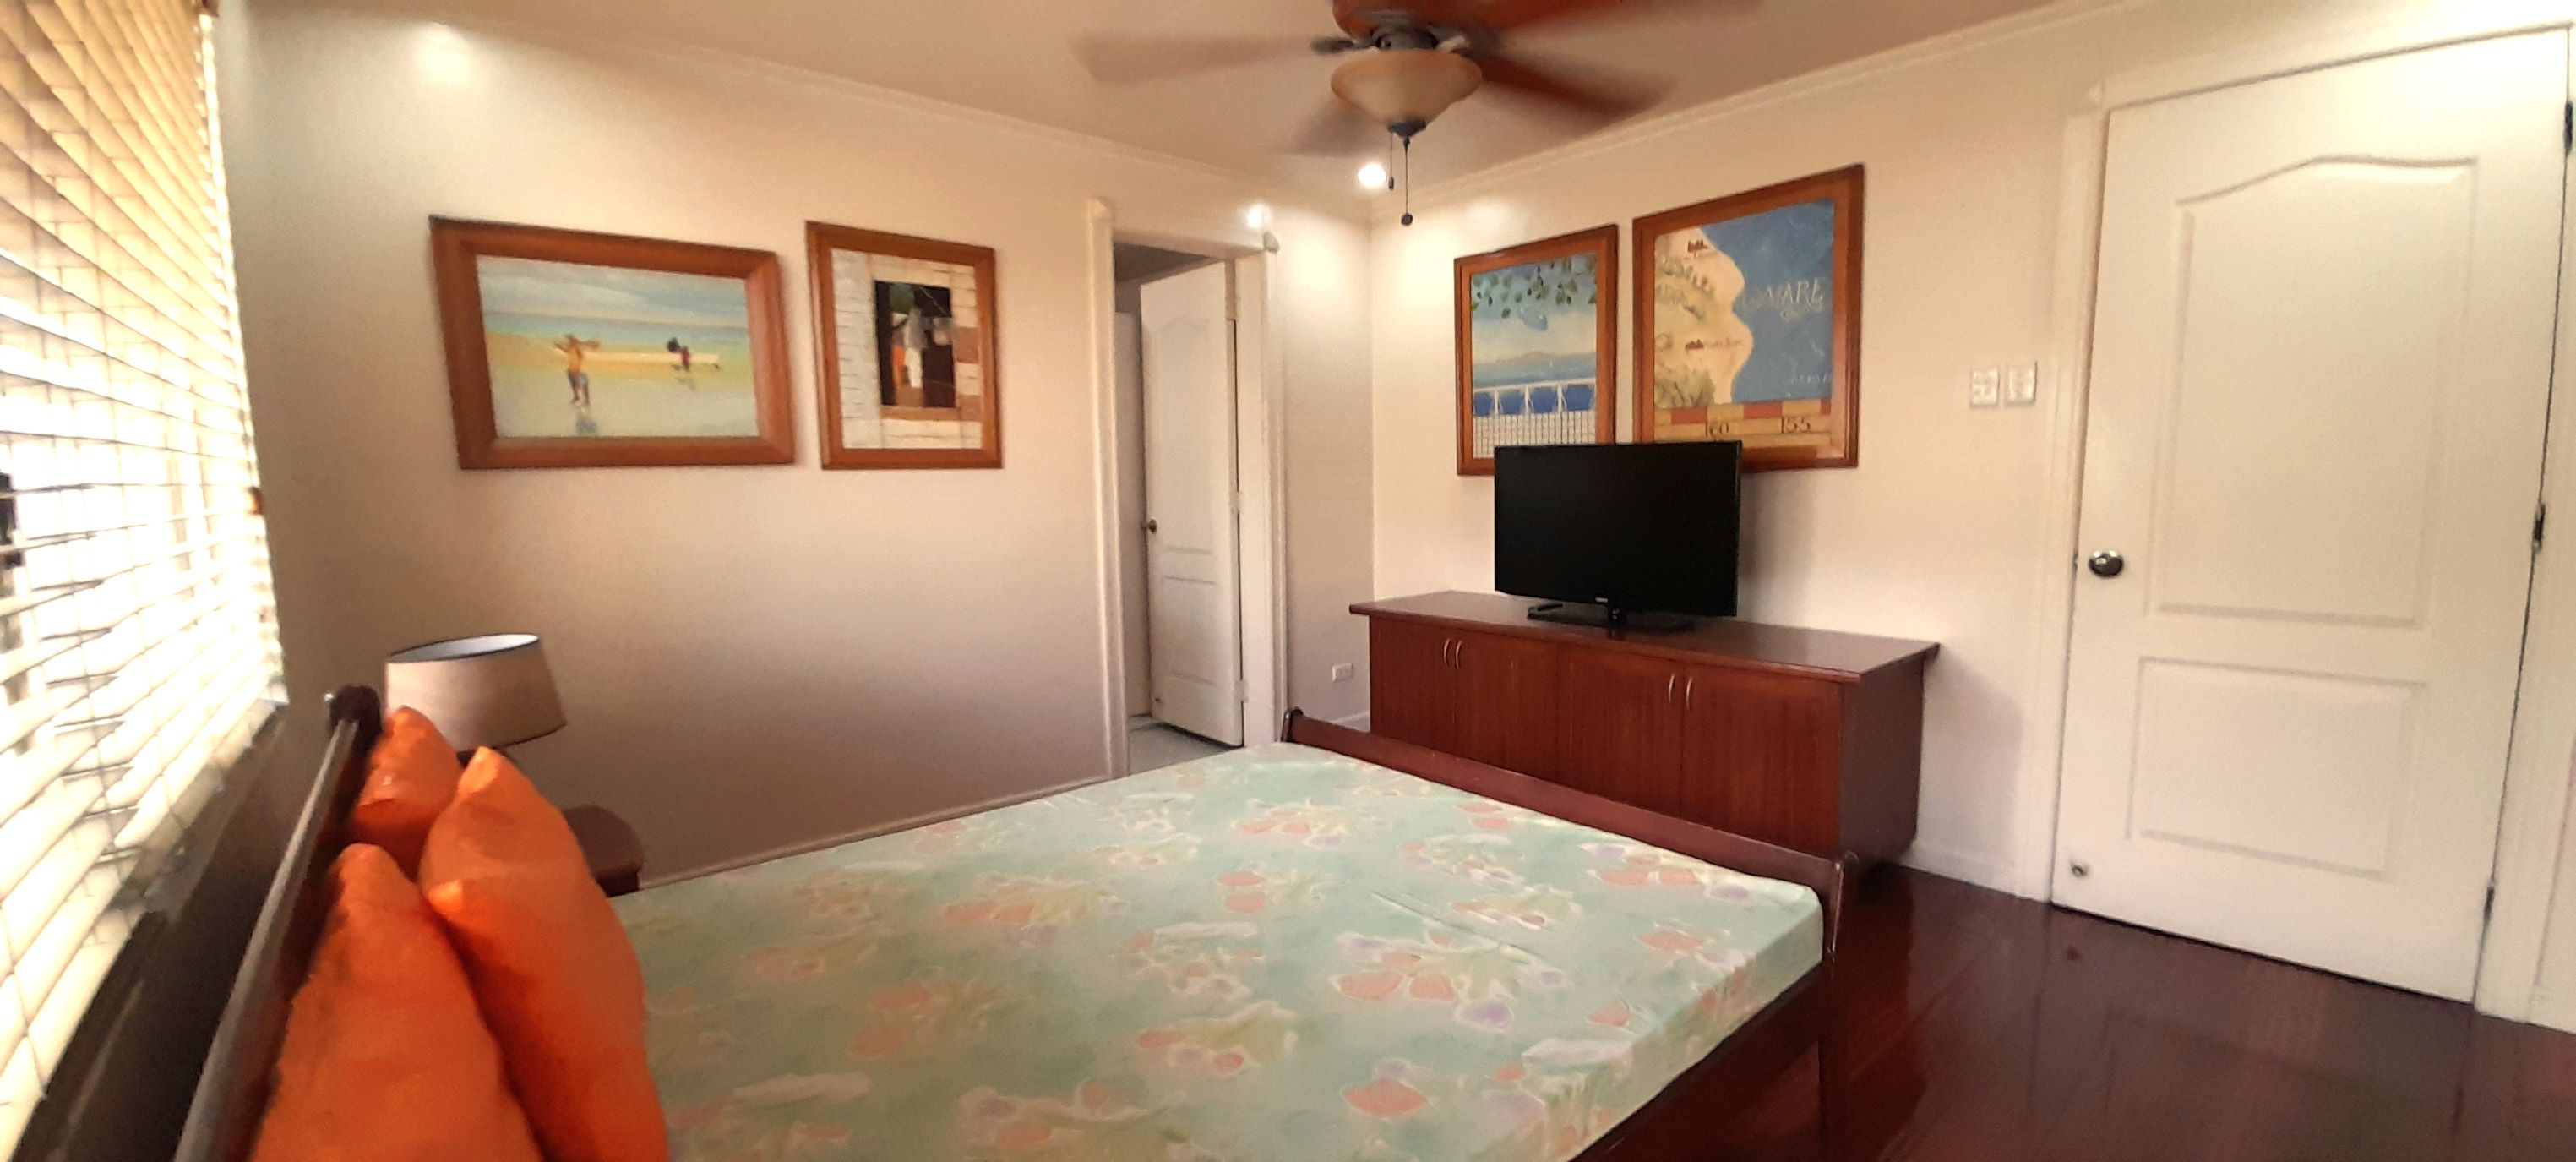 3-bedroom-furnished-house-in-banilad-cebu-city-cebu